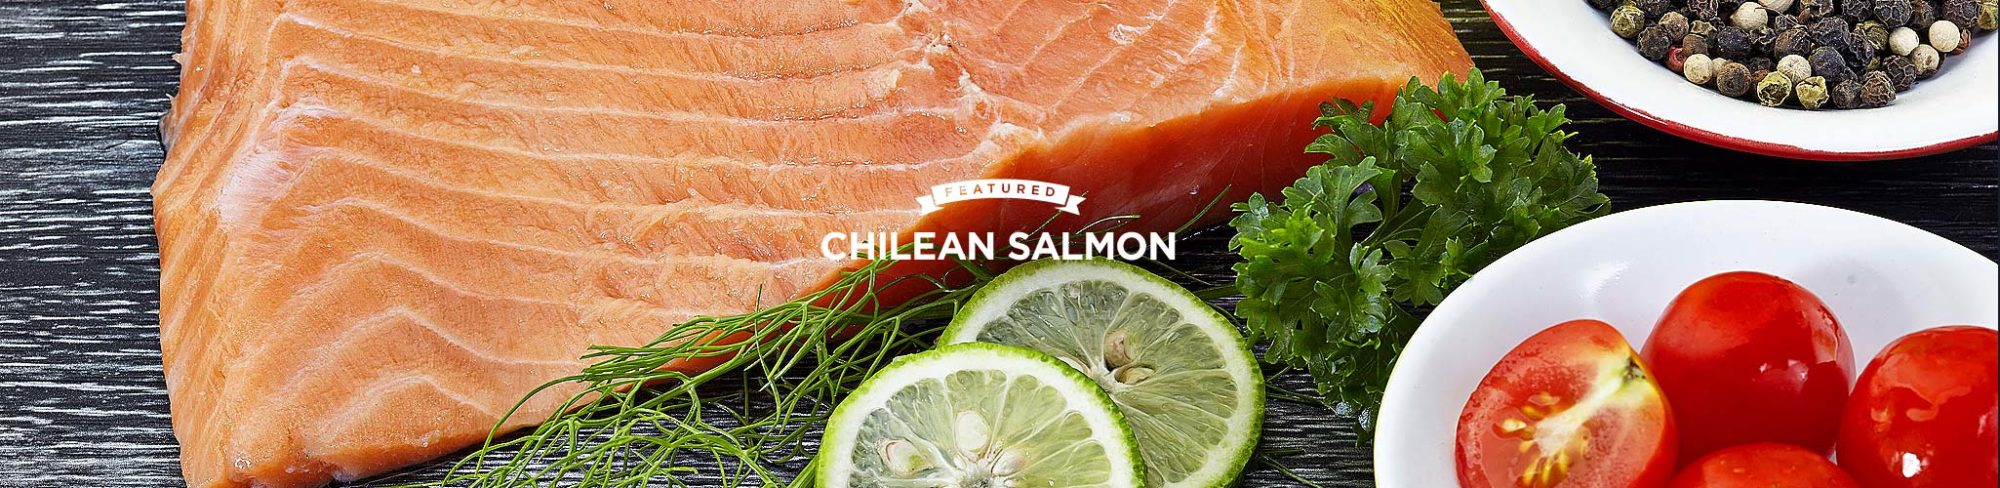 Chilean Salmon